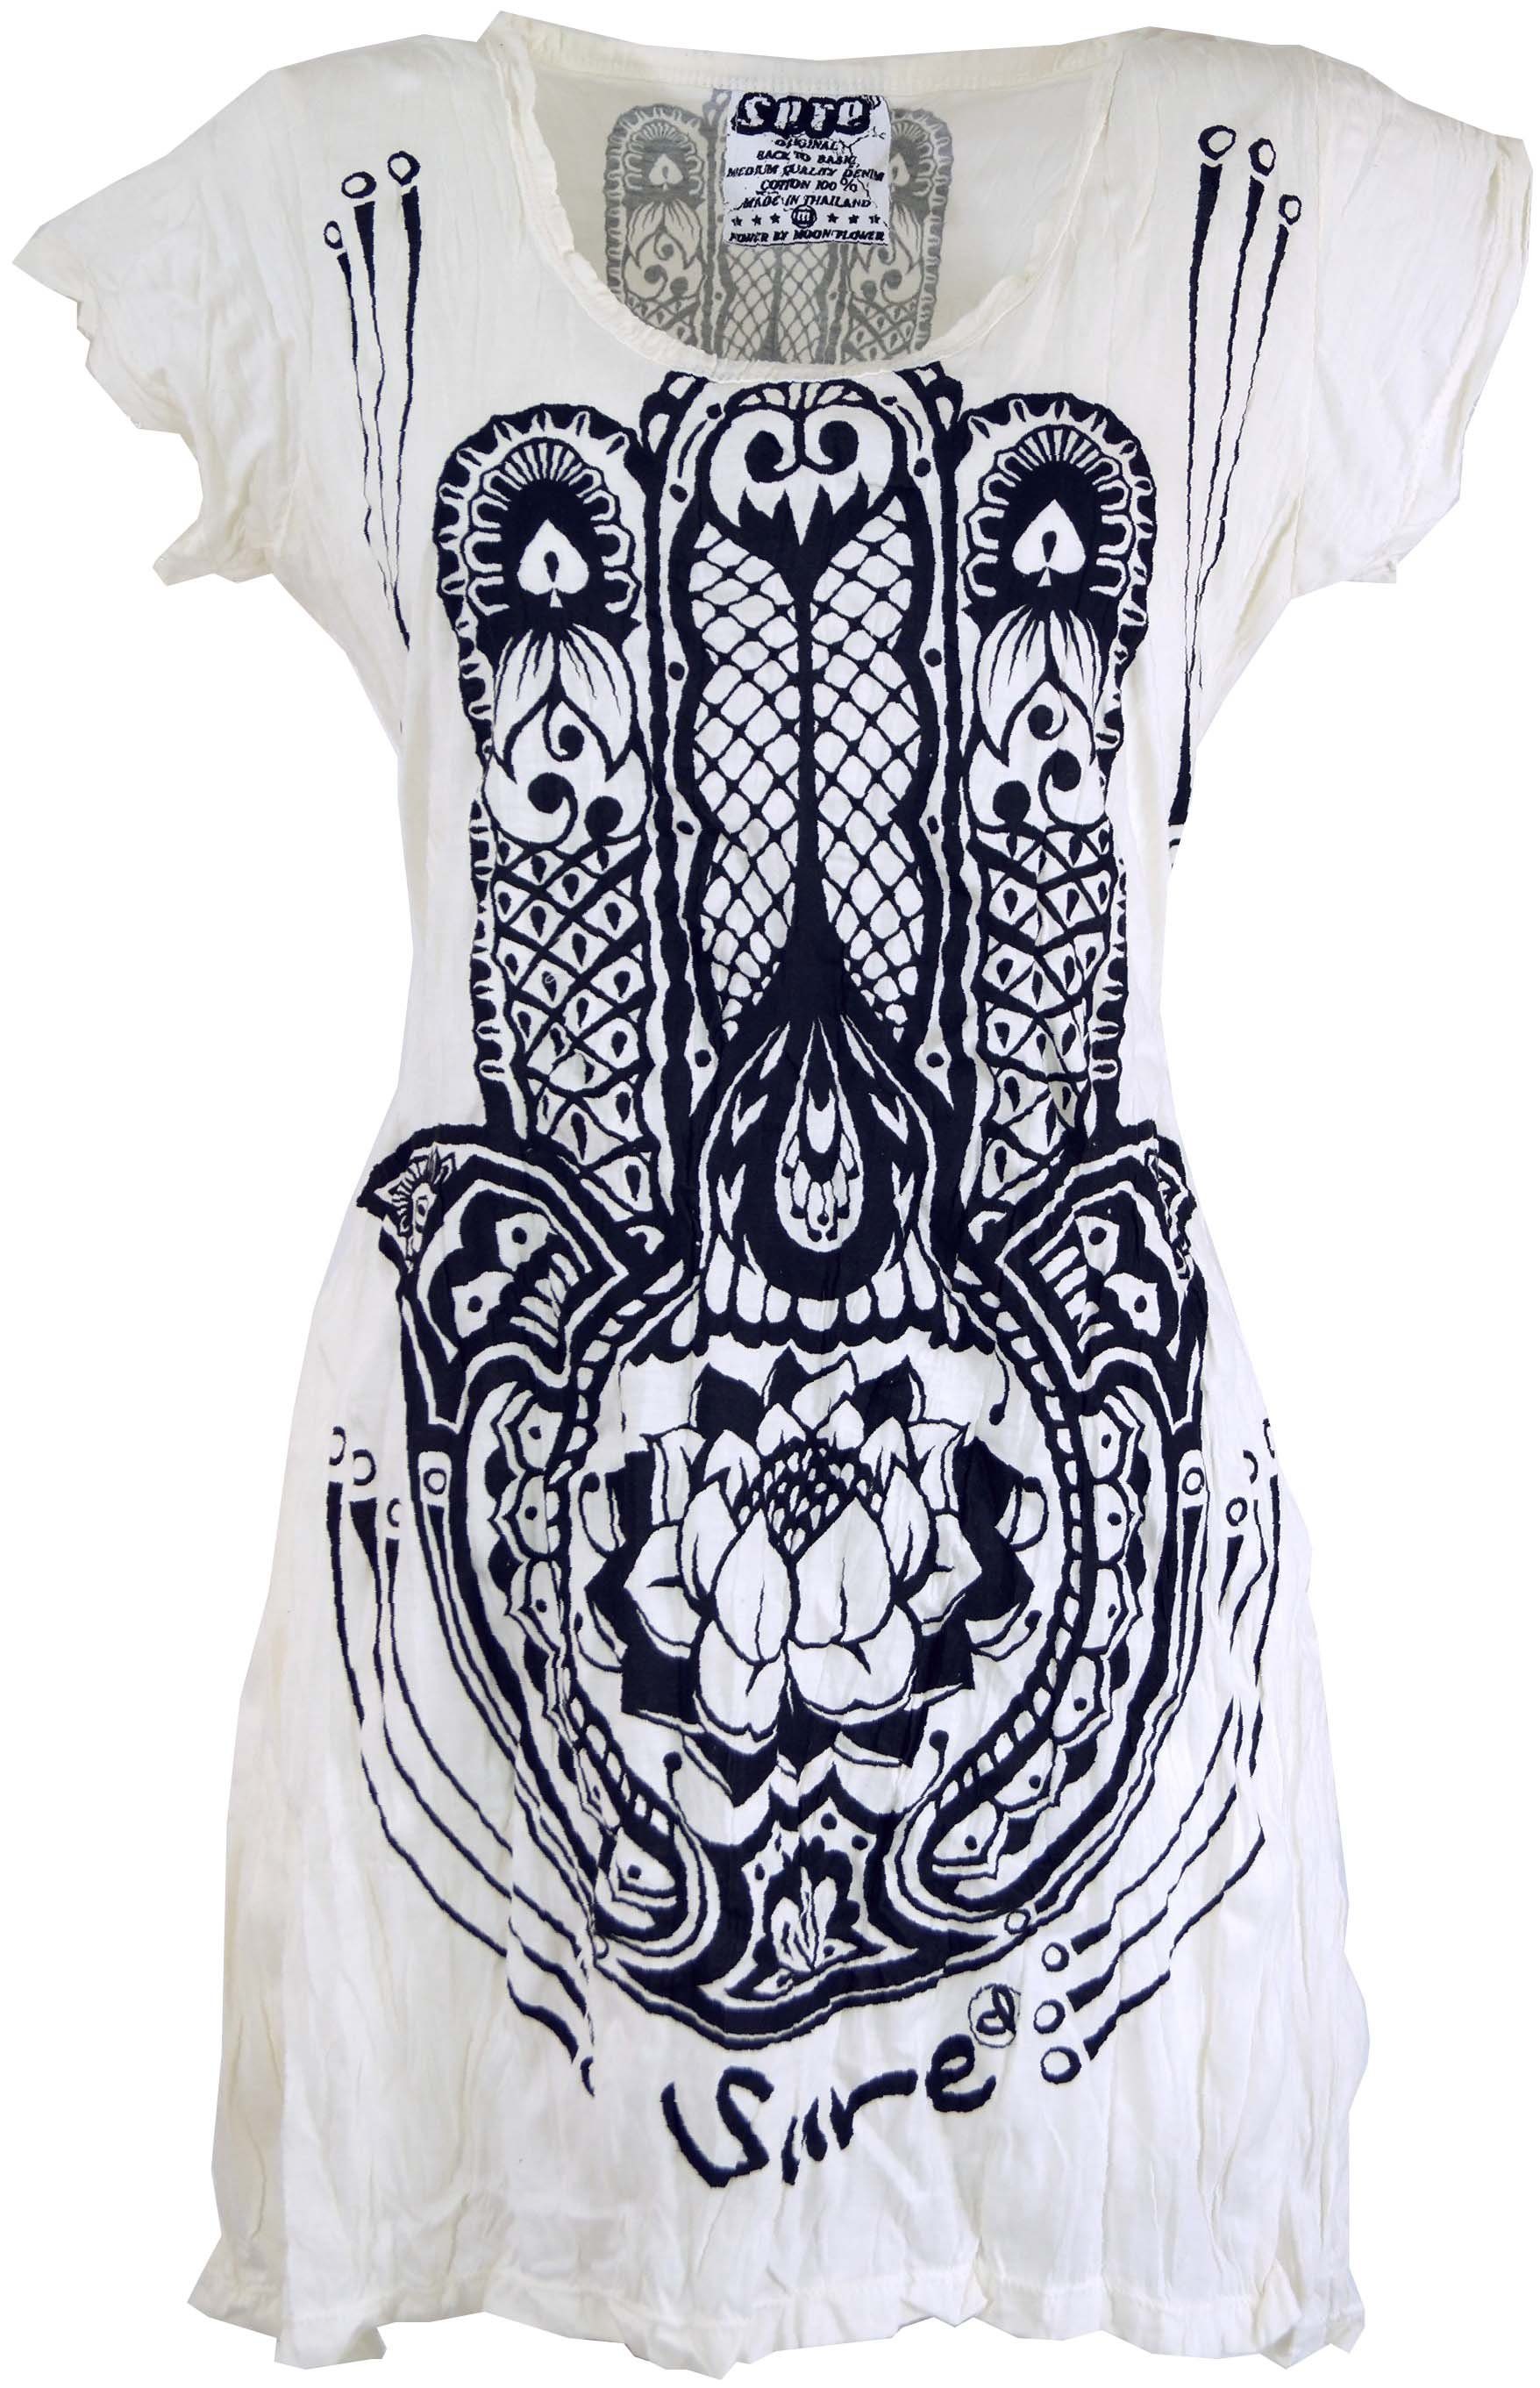 Guru-Shop T-Shirt Sure Long Shirt, Minikleid Fatimas Hand - weiß Festival, Goa Style, alternative Bekleidung